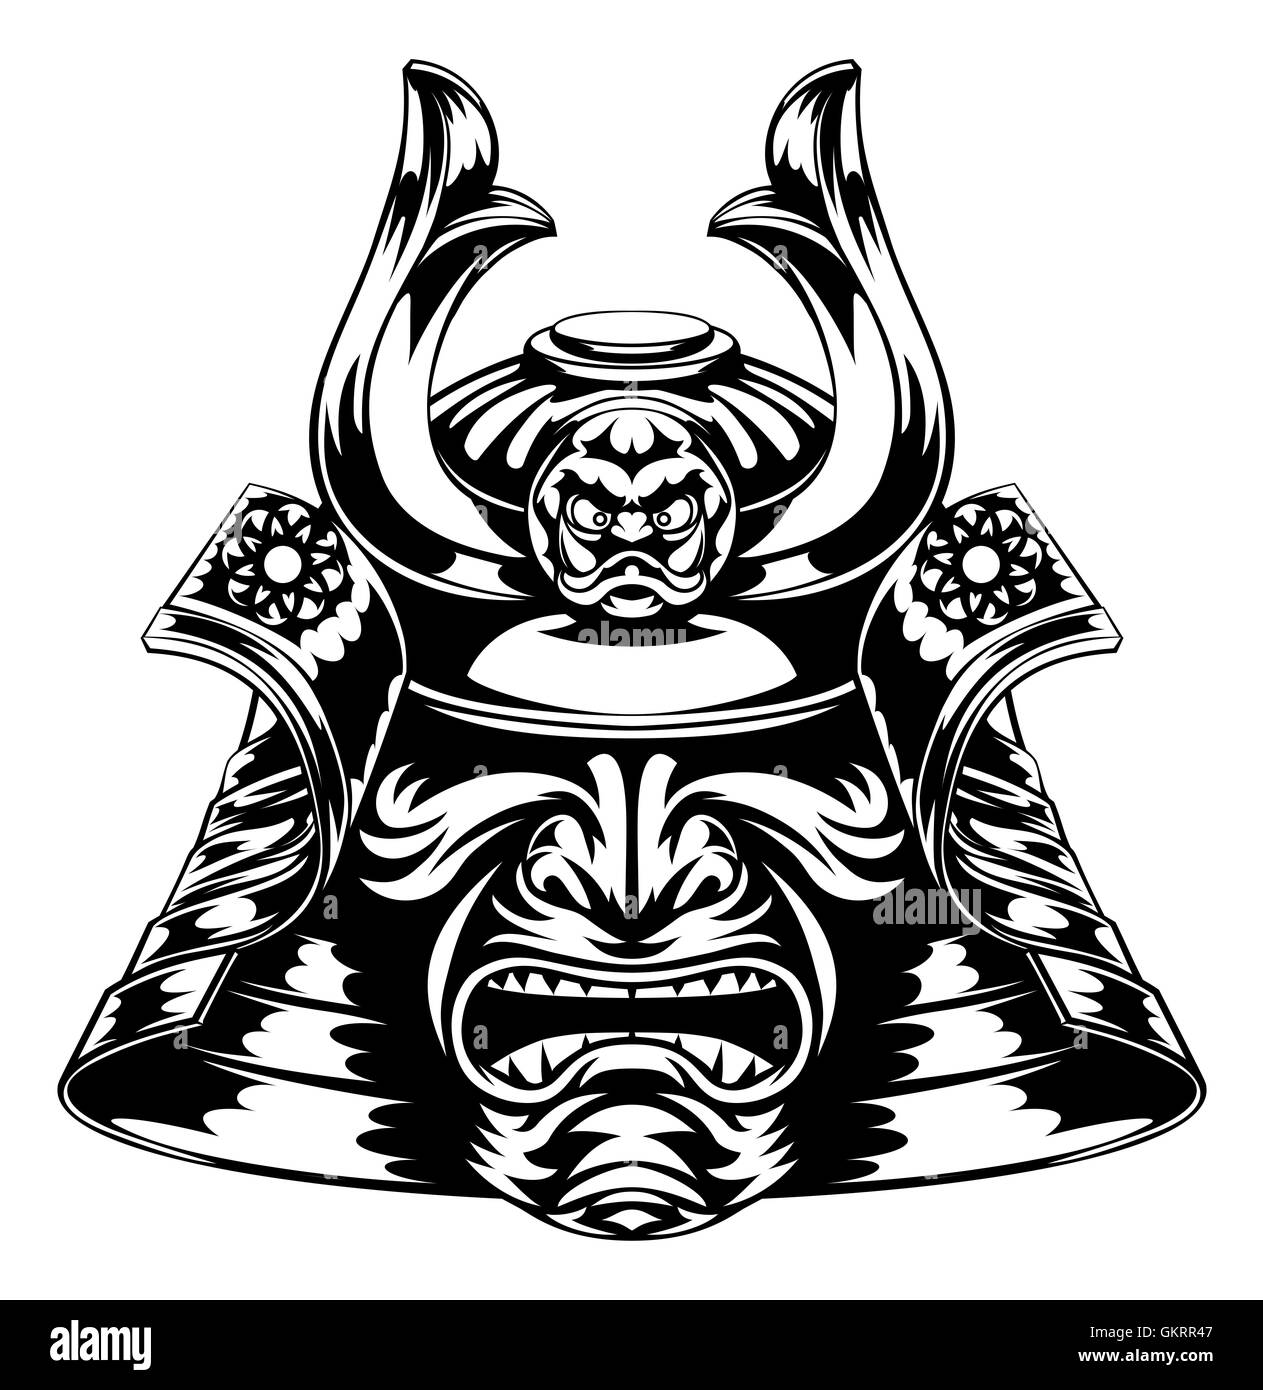 A Japanese samurai mask and helmet illustration Stock Photo